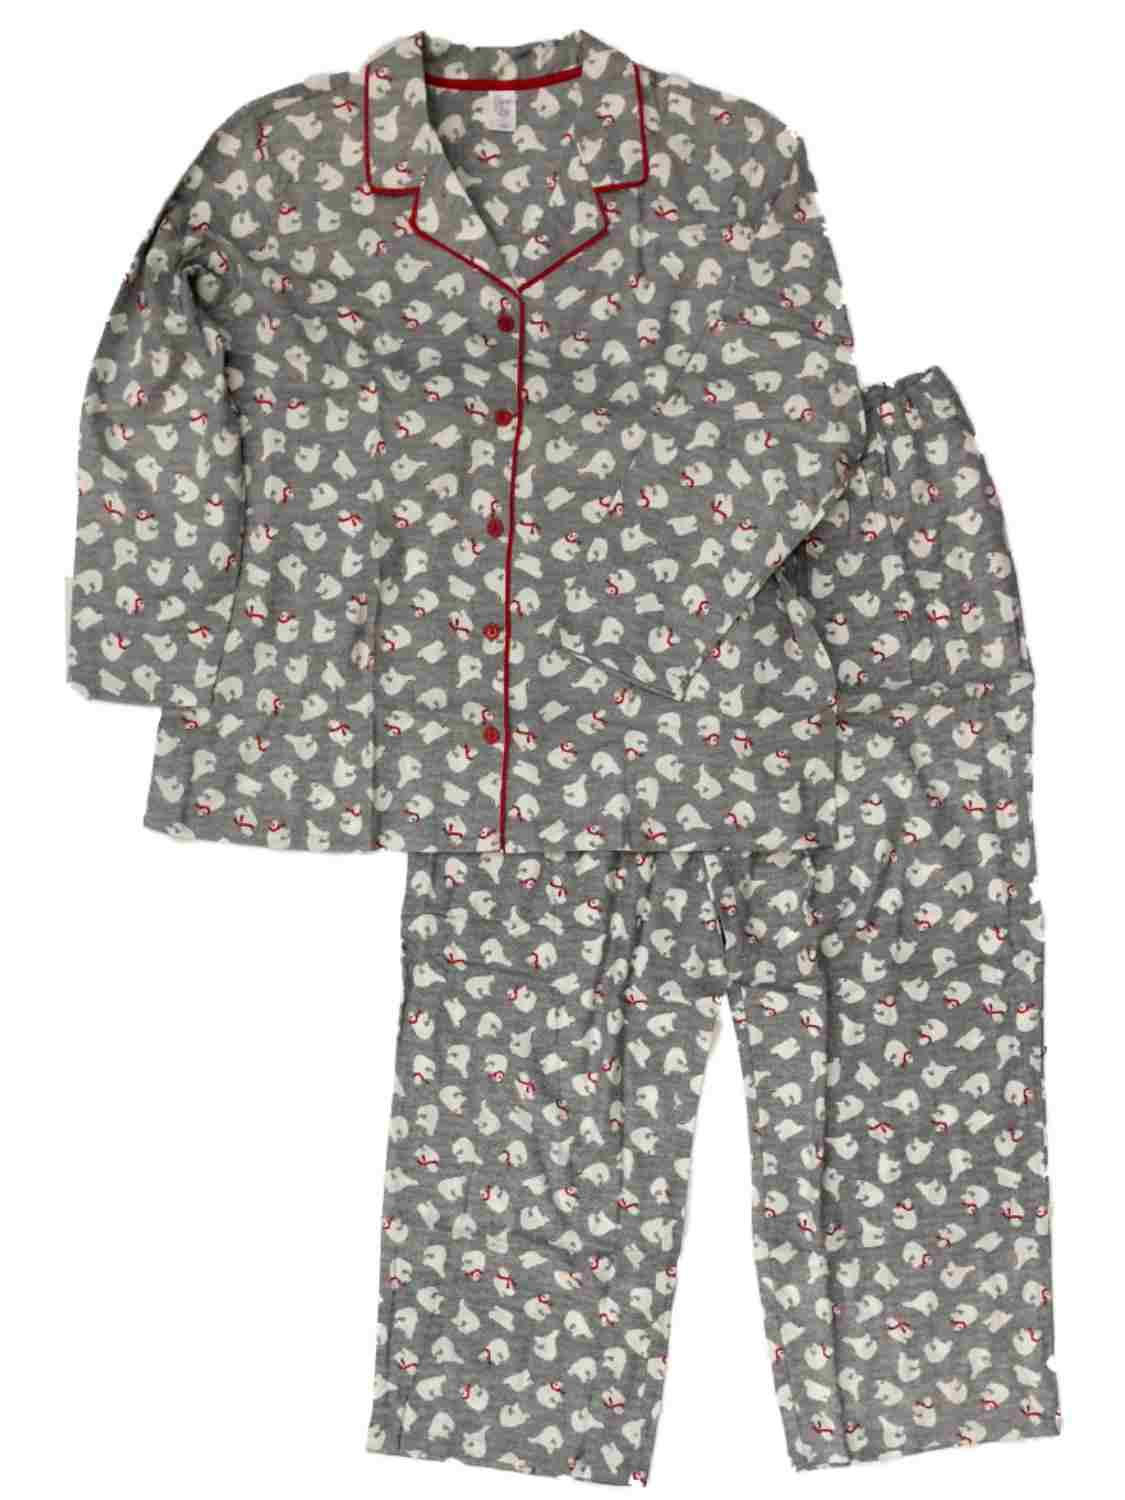 Sleep Chic Womens Gray Polar Bear Print Flannel Pajamas Sleep Set